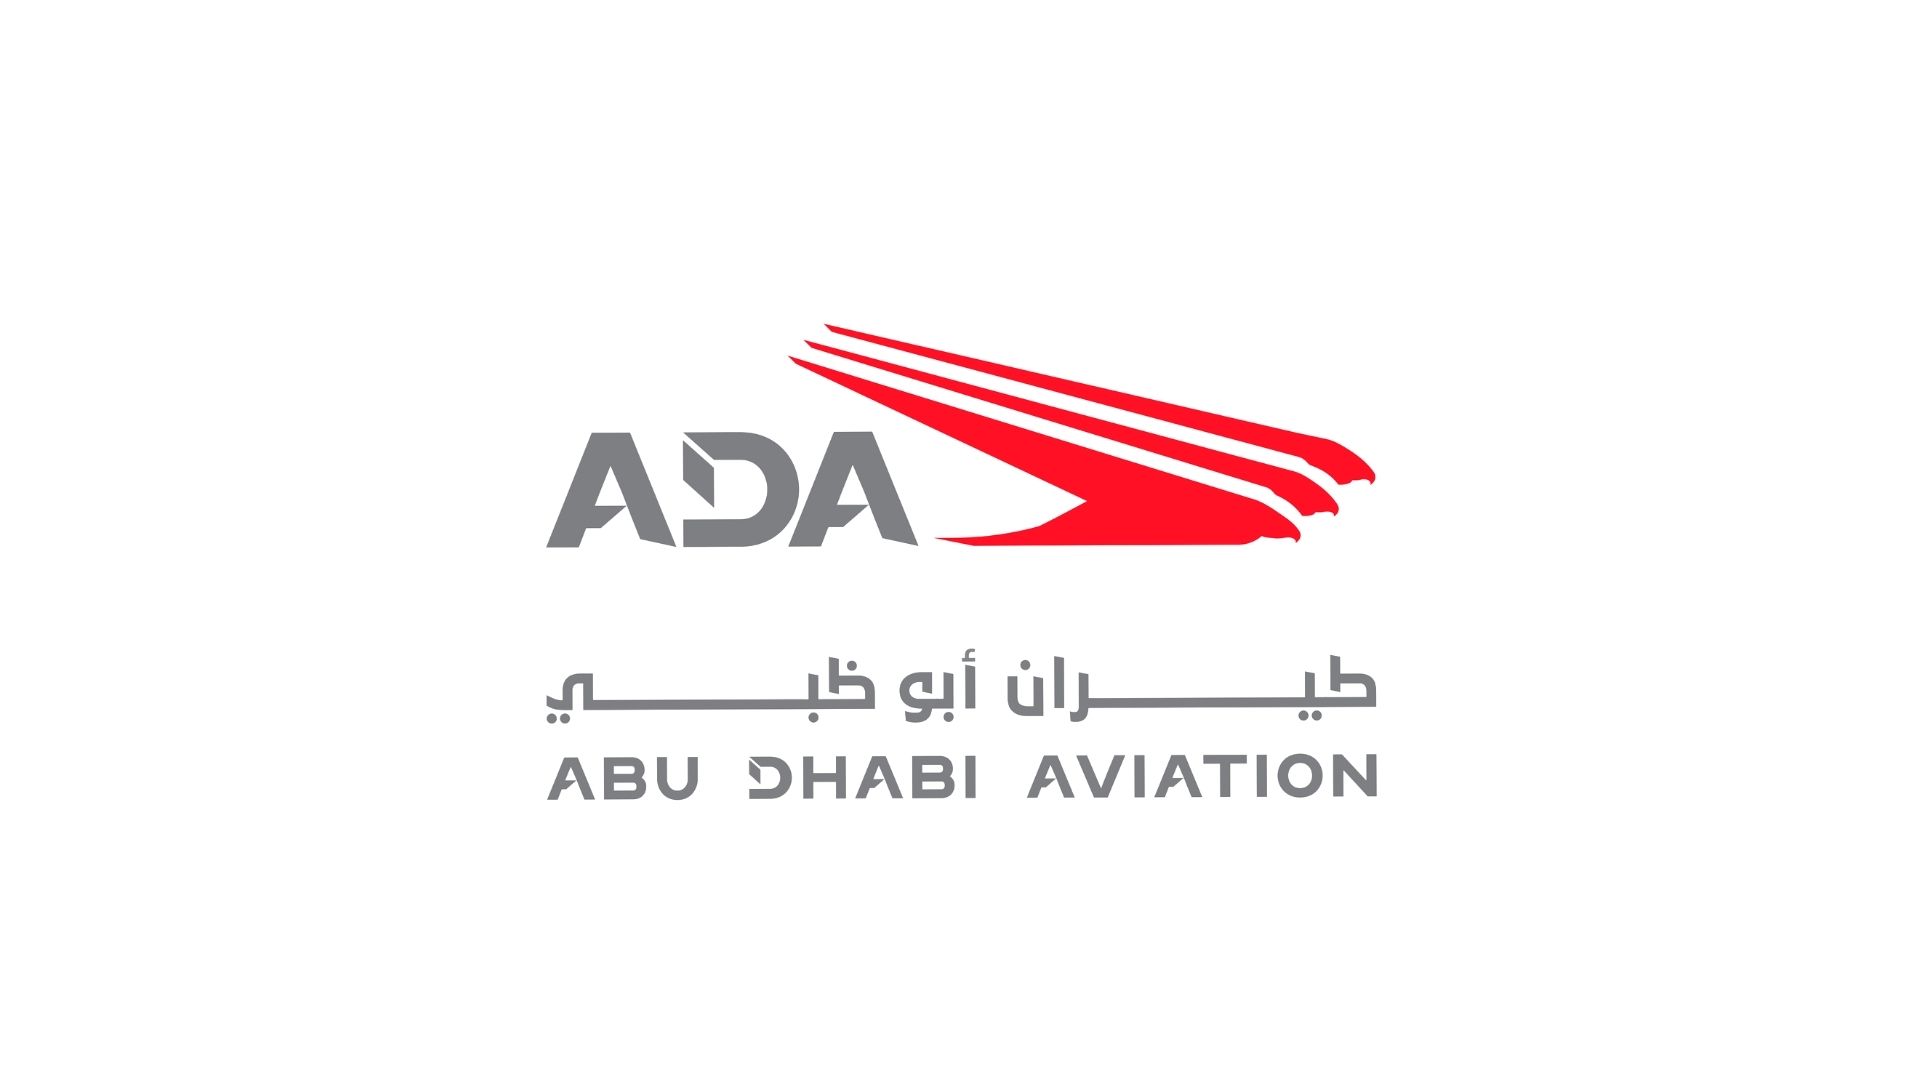  Abu Dhabi Aviation Co. Logo